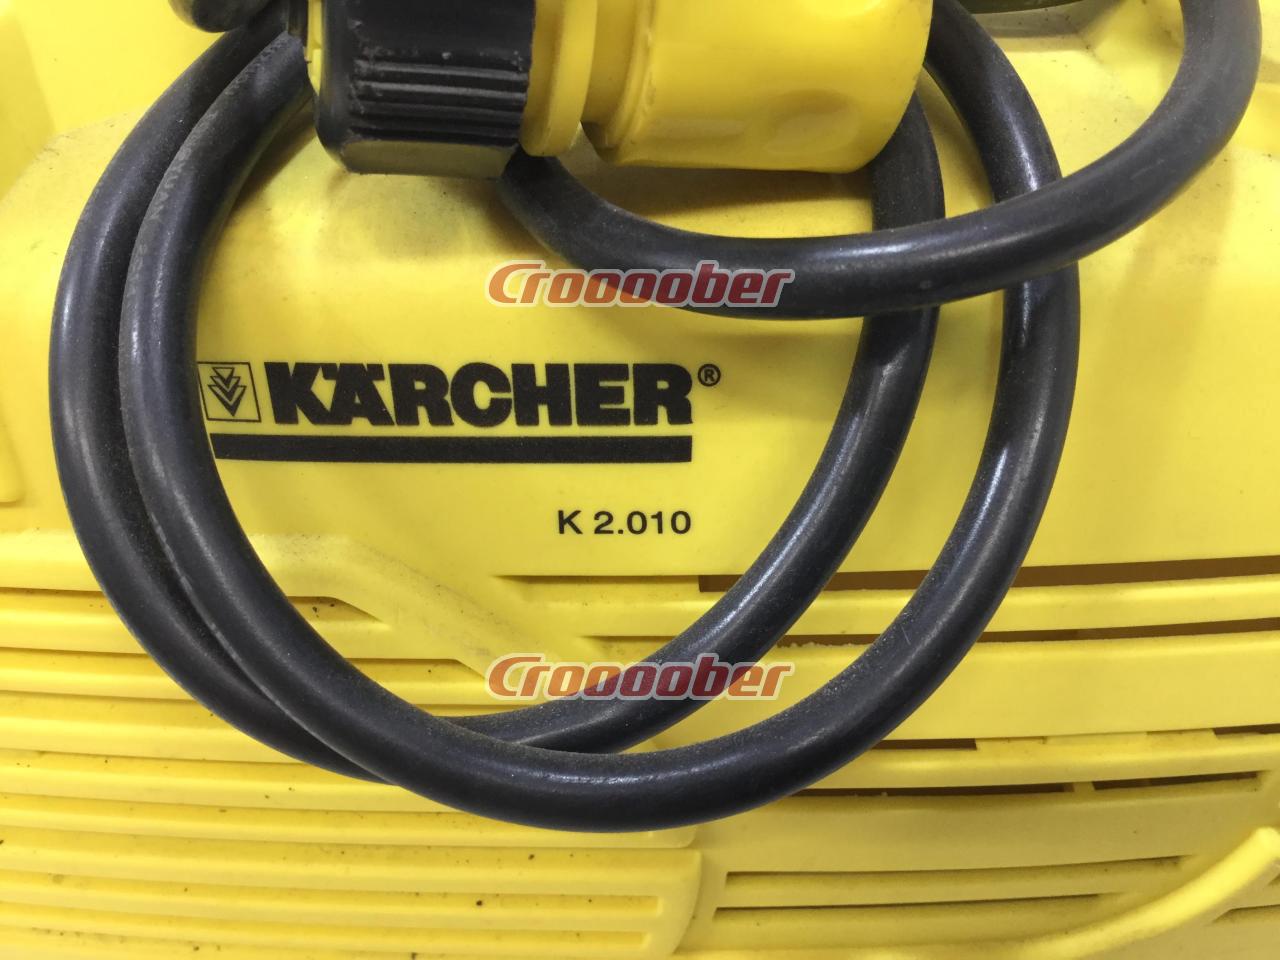 KARCHER (ケルヒャー) 家庭用高圧洗浄機 K2.010 | その他 その他パーツ 